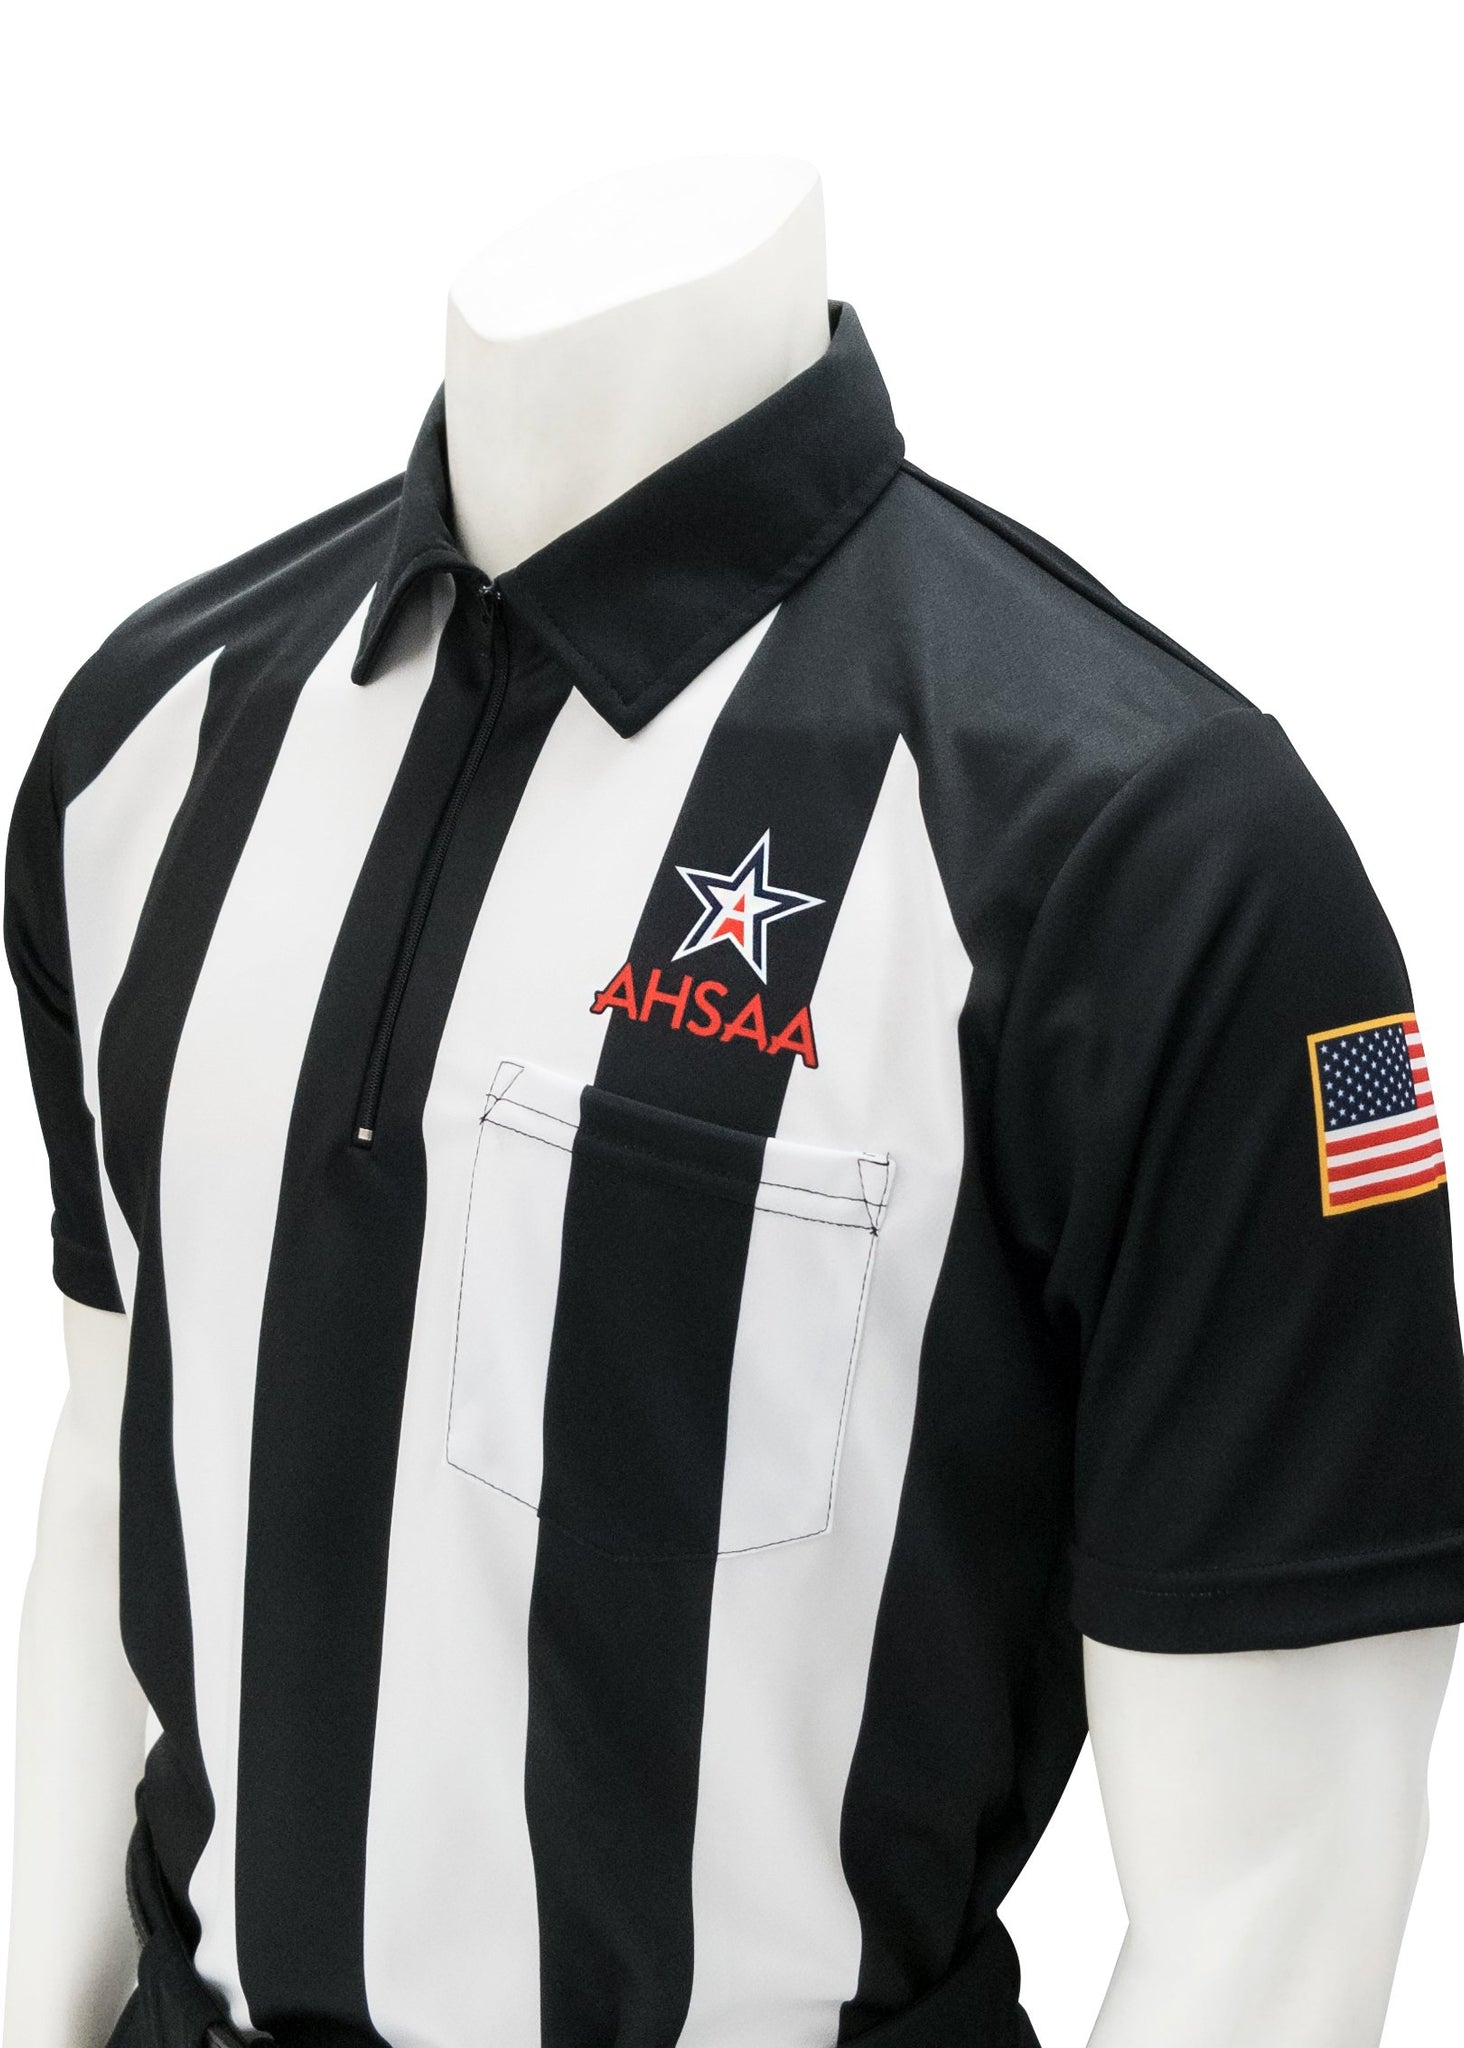 USA151AL-607 - Smitty "Made in USA" - "BODY FLEX" Football Men's Short Sleeve Shirt